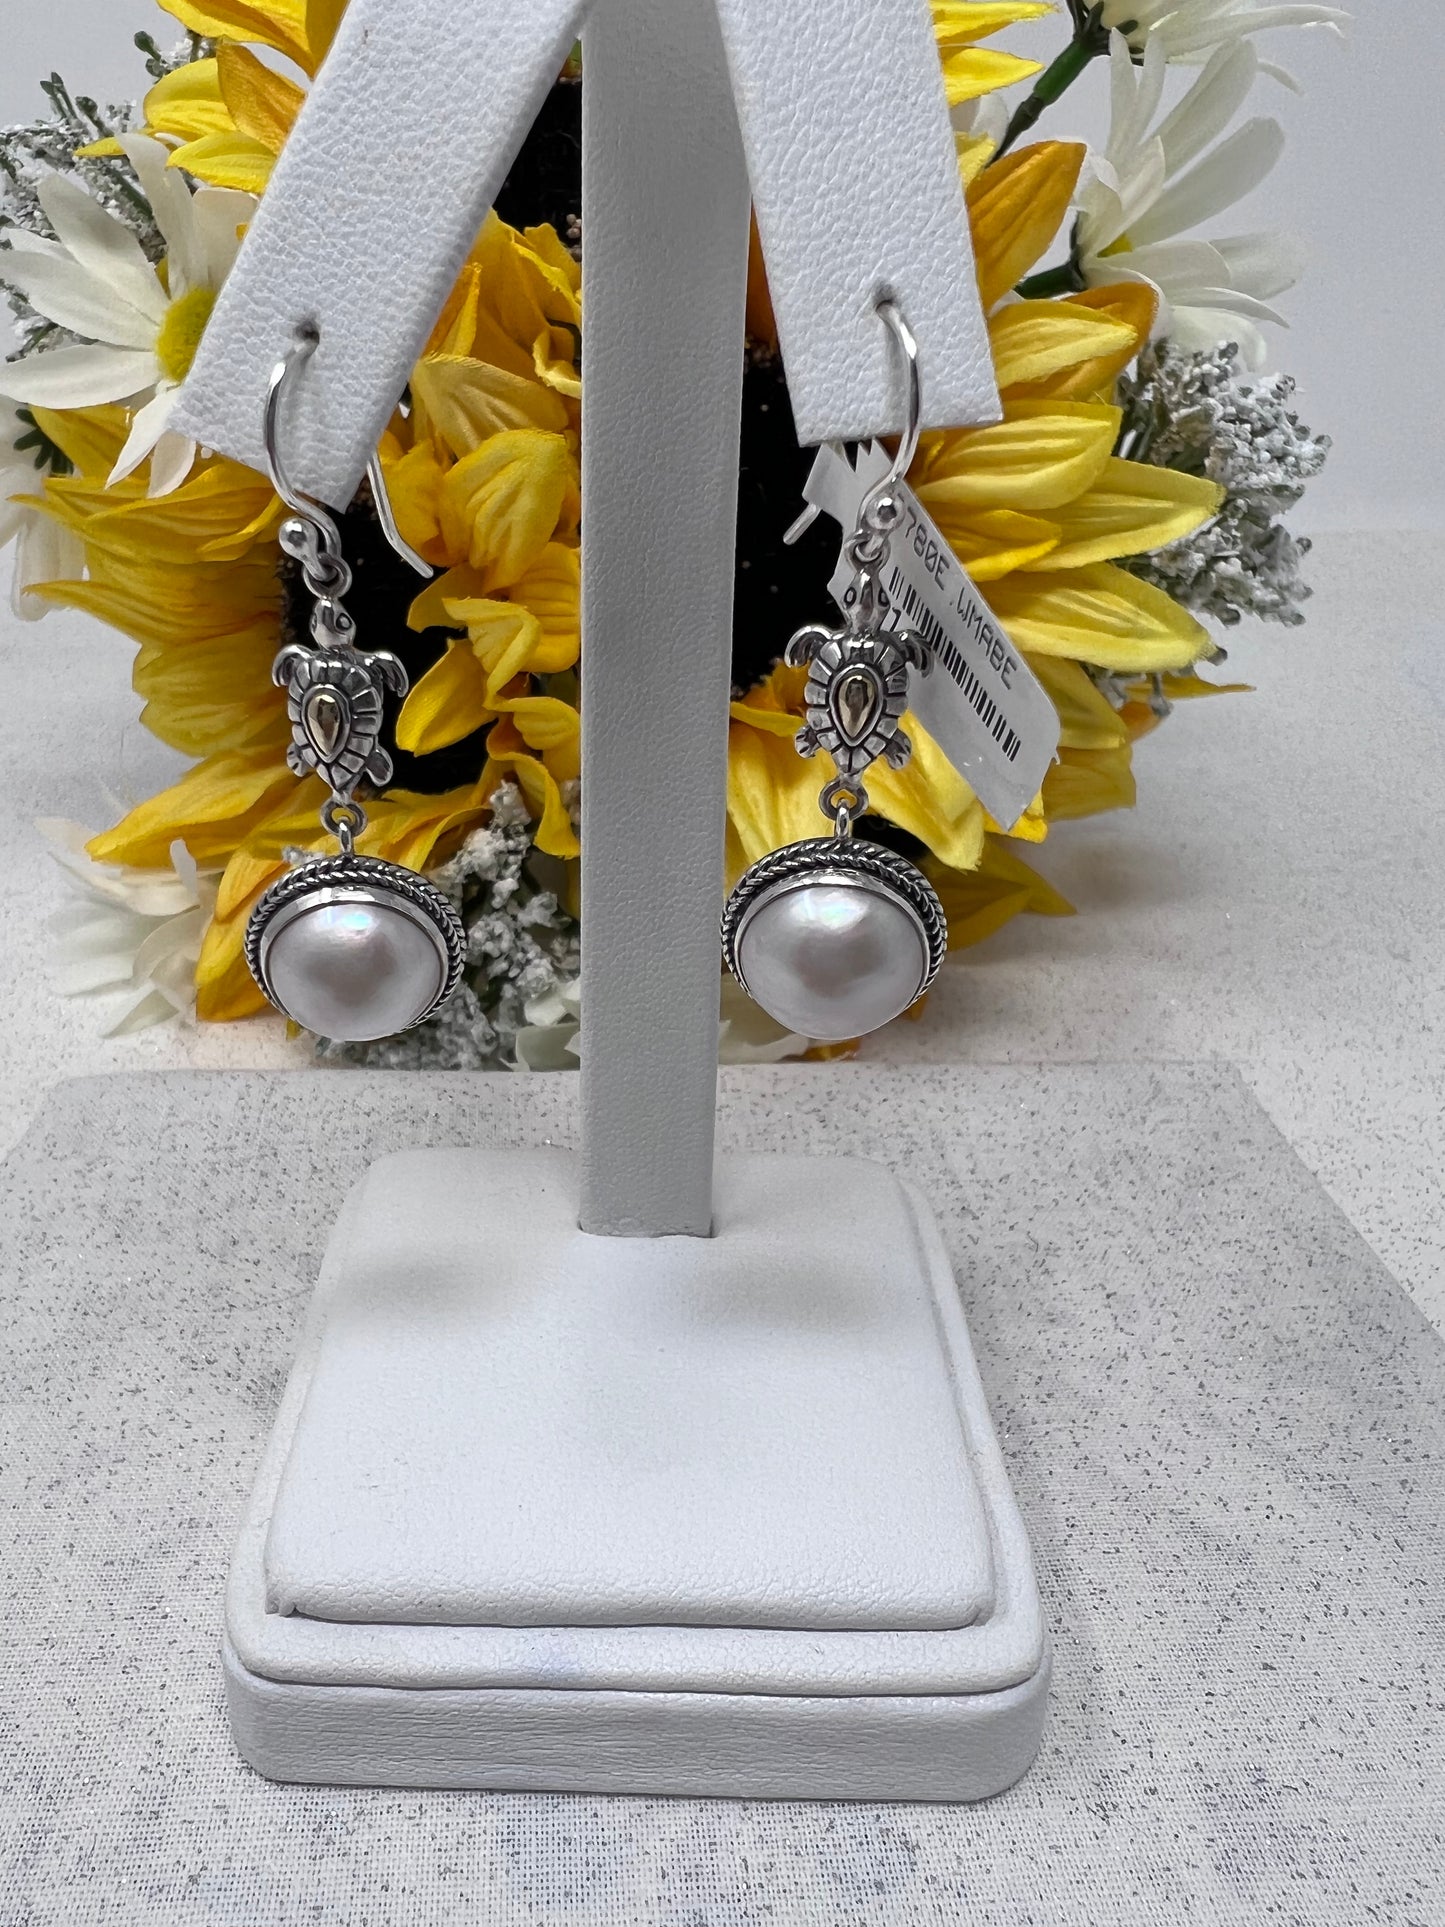 Samuel B. 18k & Silver Flower Link Earrings in White